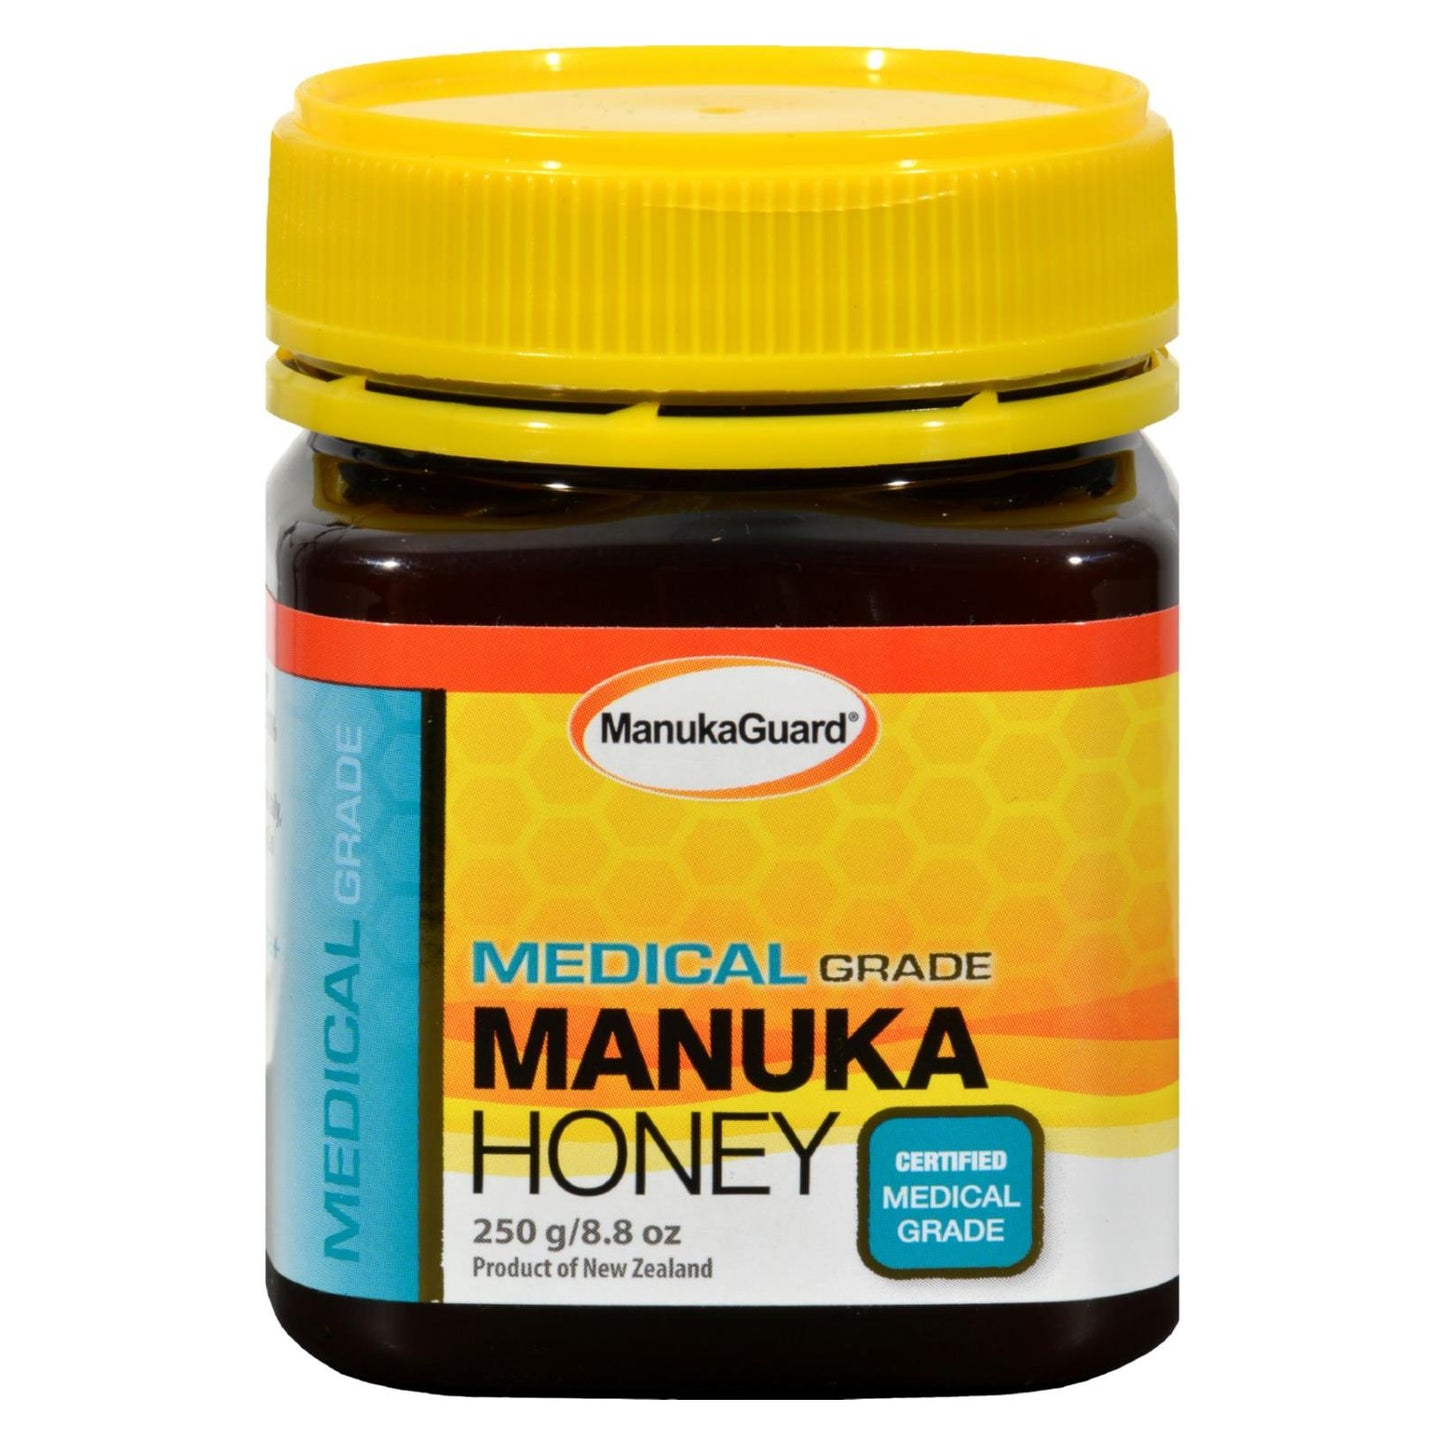 
                  
                    Manukaguard Medical Grade Manuka Honey, 8.8 Oz
                  
                